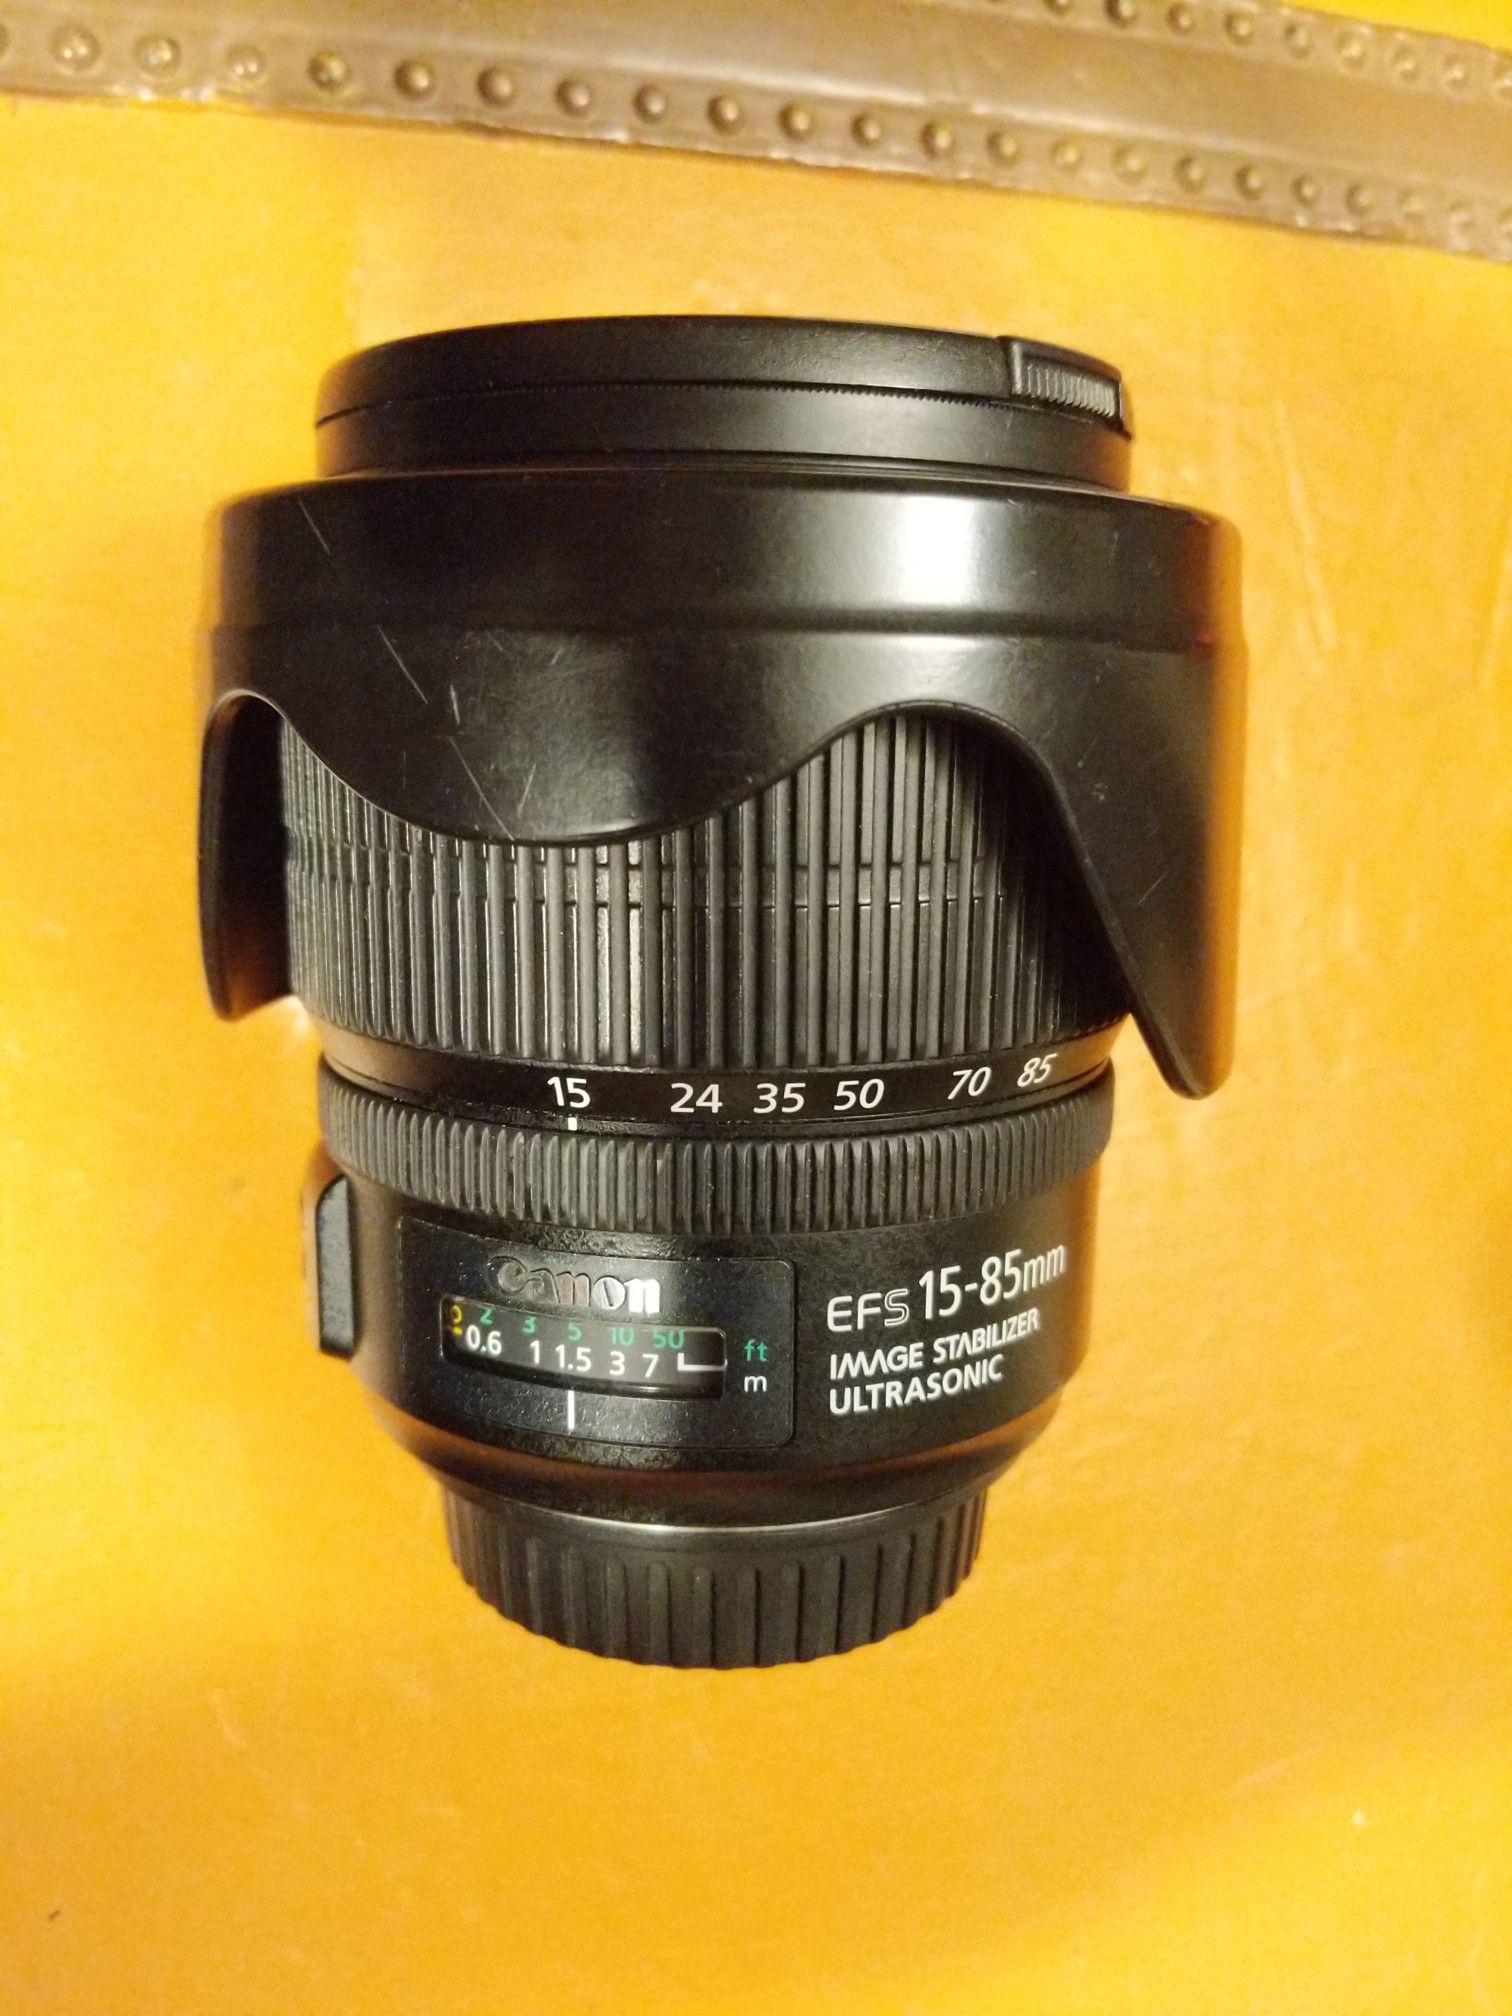 Canon 15-85mm lens